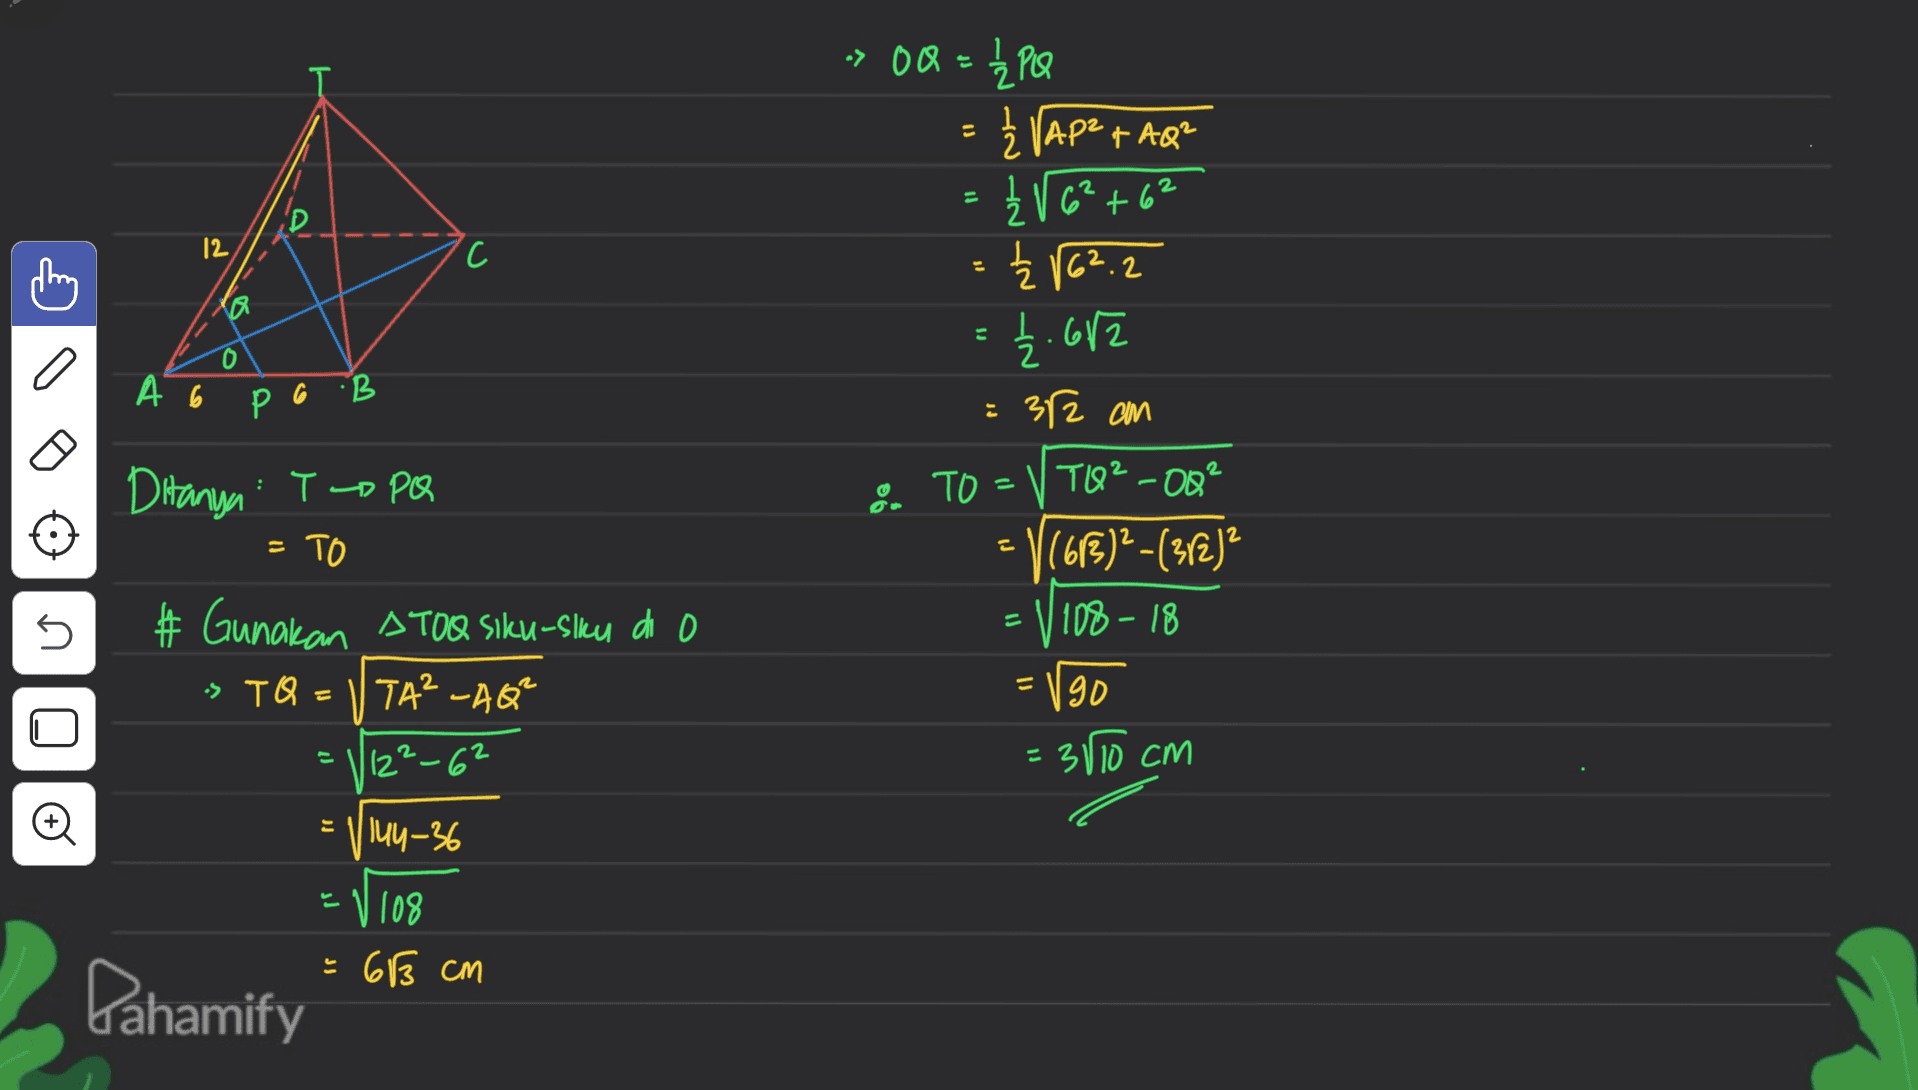 = 11 12 C » 0Q = 1/₂ PQ Ž VAP²+ AQ? Ž V 6²+6² Ž V62.2 2.682 372 an TO - TO²-00² = V(63)2-(32) V108 - 18 는 0 A 6 P 6 B E Ditanya Topo = TO = U 5 # Gunakan ATOQ Siku-sku dio s TQ = 1TA? - AQ² =/go o U E 2 |12²-62 = 3110 cm o = y 144-36 = 1 108 - 63 cm Dahamify 